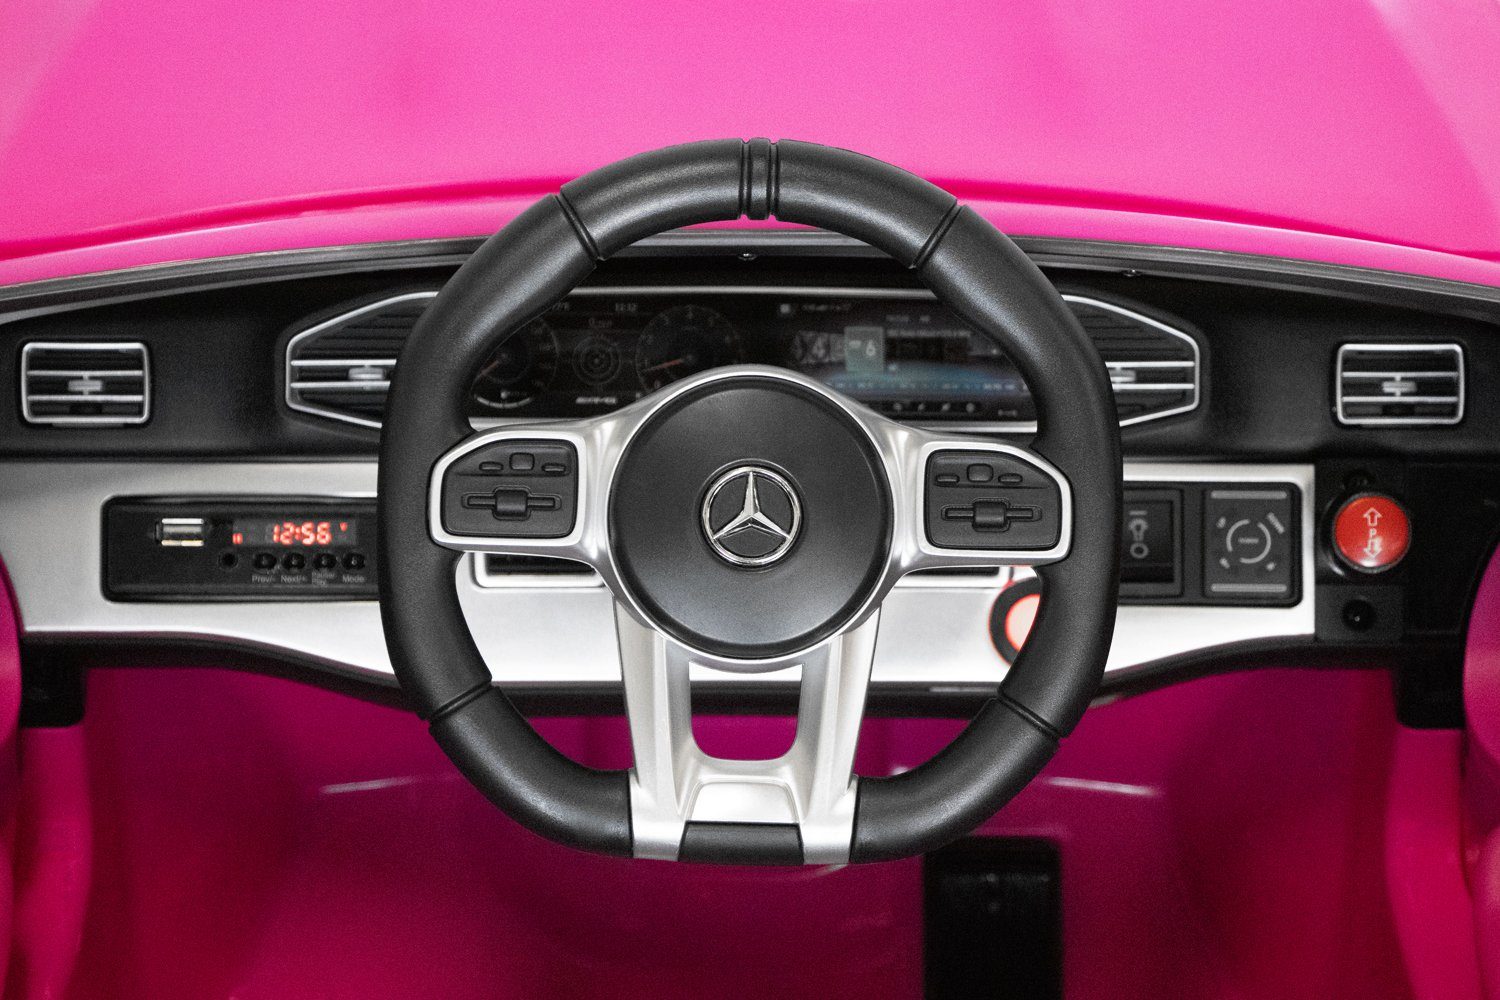 Pink M-Class Smarty Mercedes Kinderauto Elektro Elektro-Kinderauto